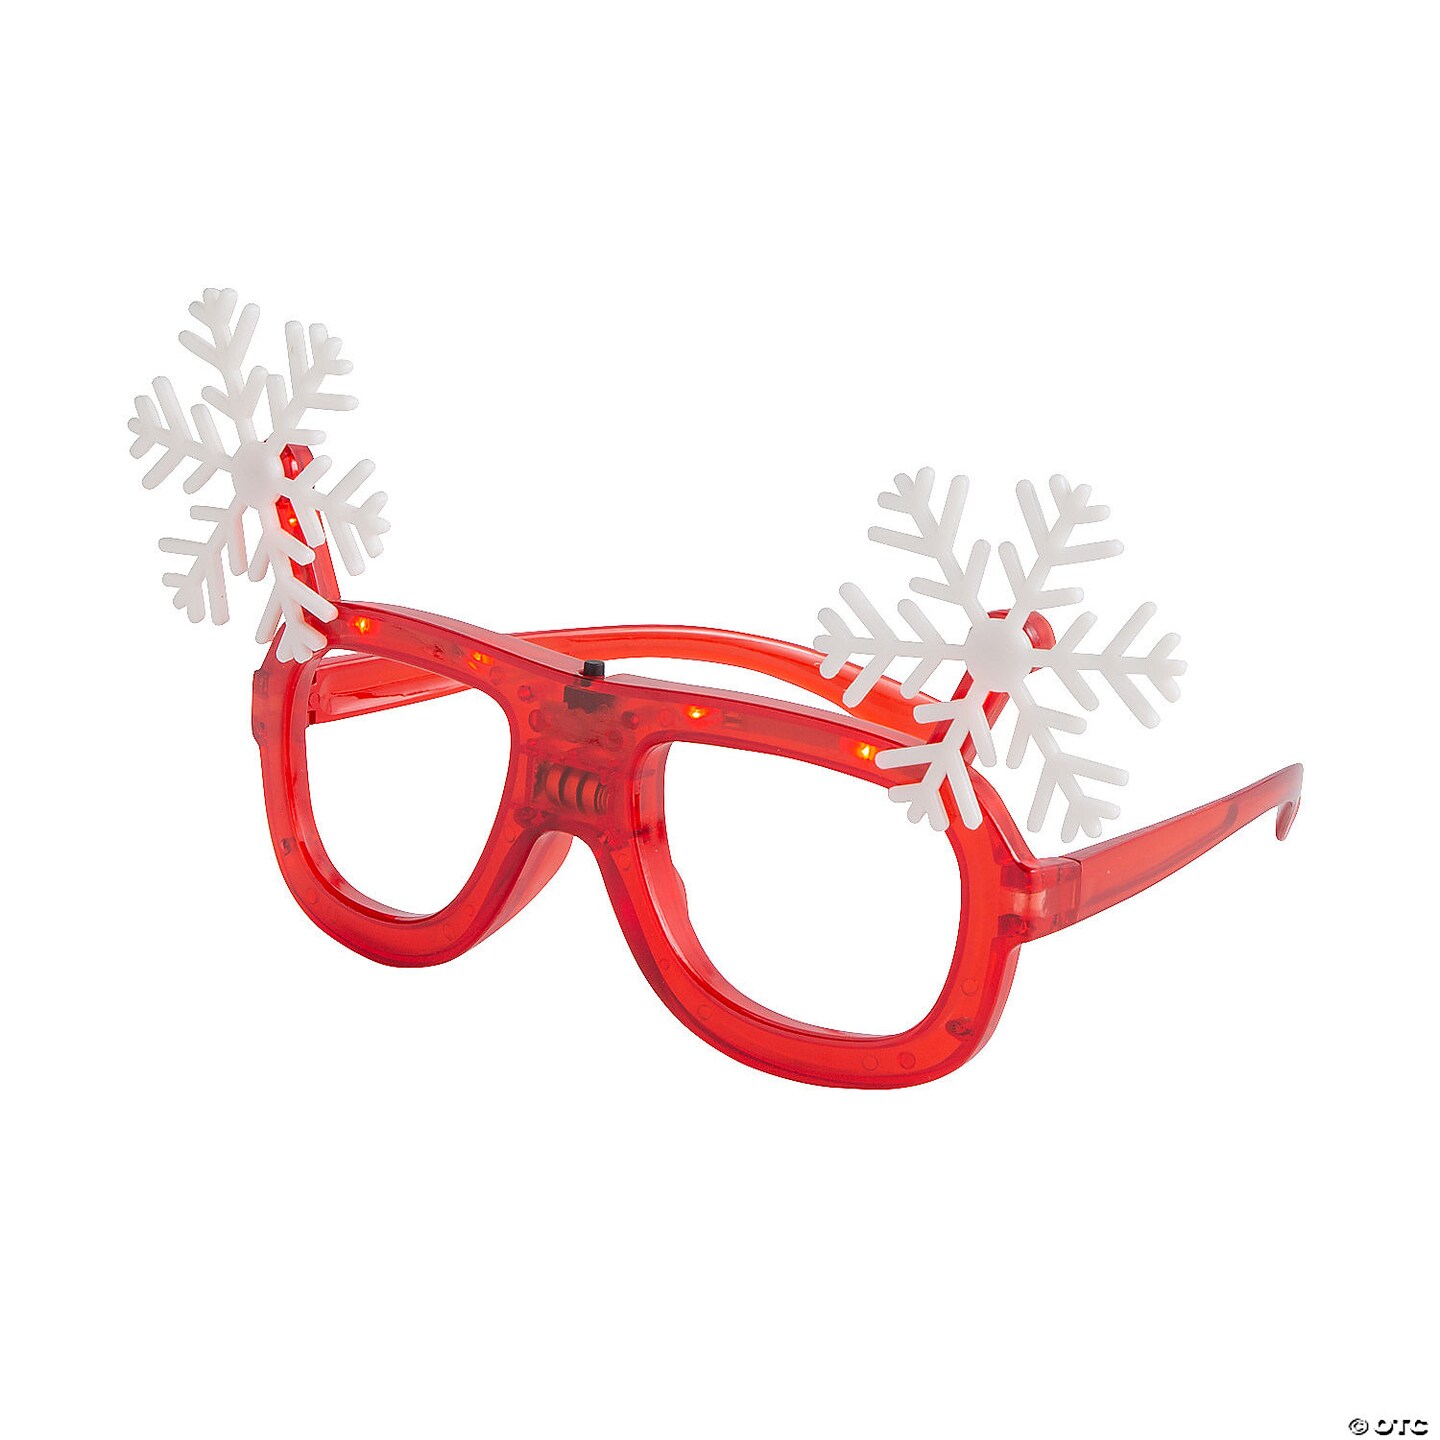 Light-Up Snowflake Glasses - 6 Pc.